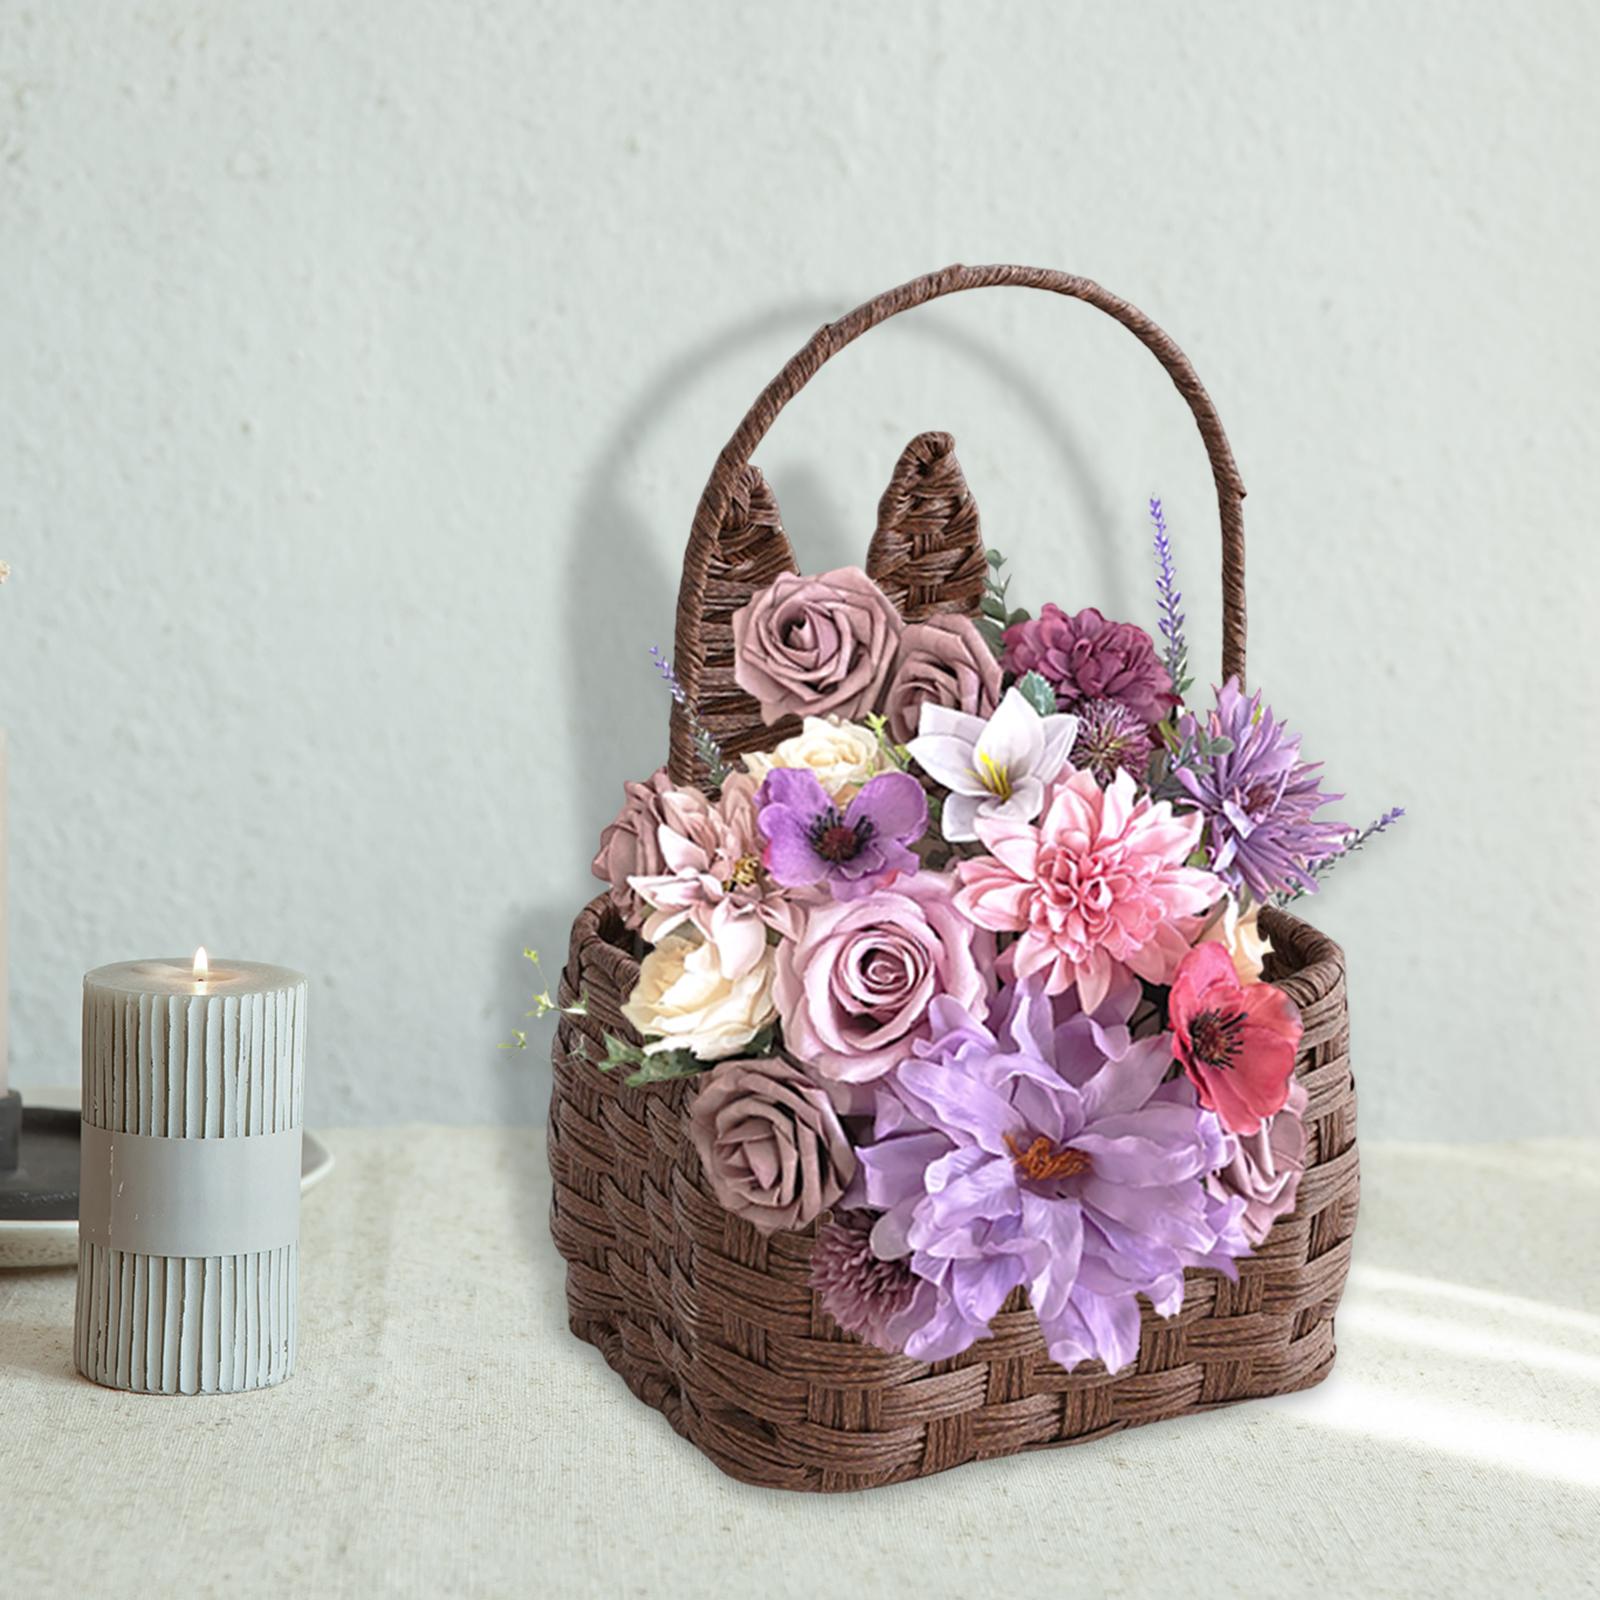 Cute Bunny Easter Basket for Family Home Wedding Garden Decoration dark brown